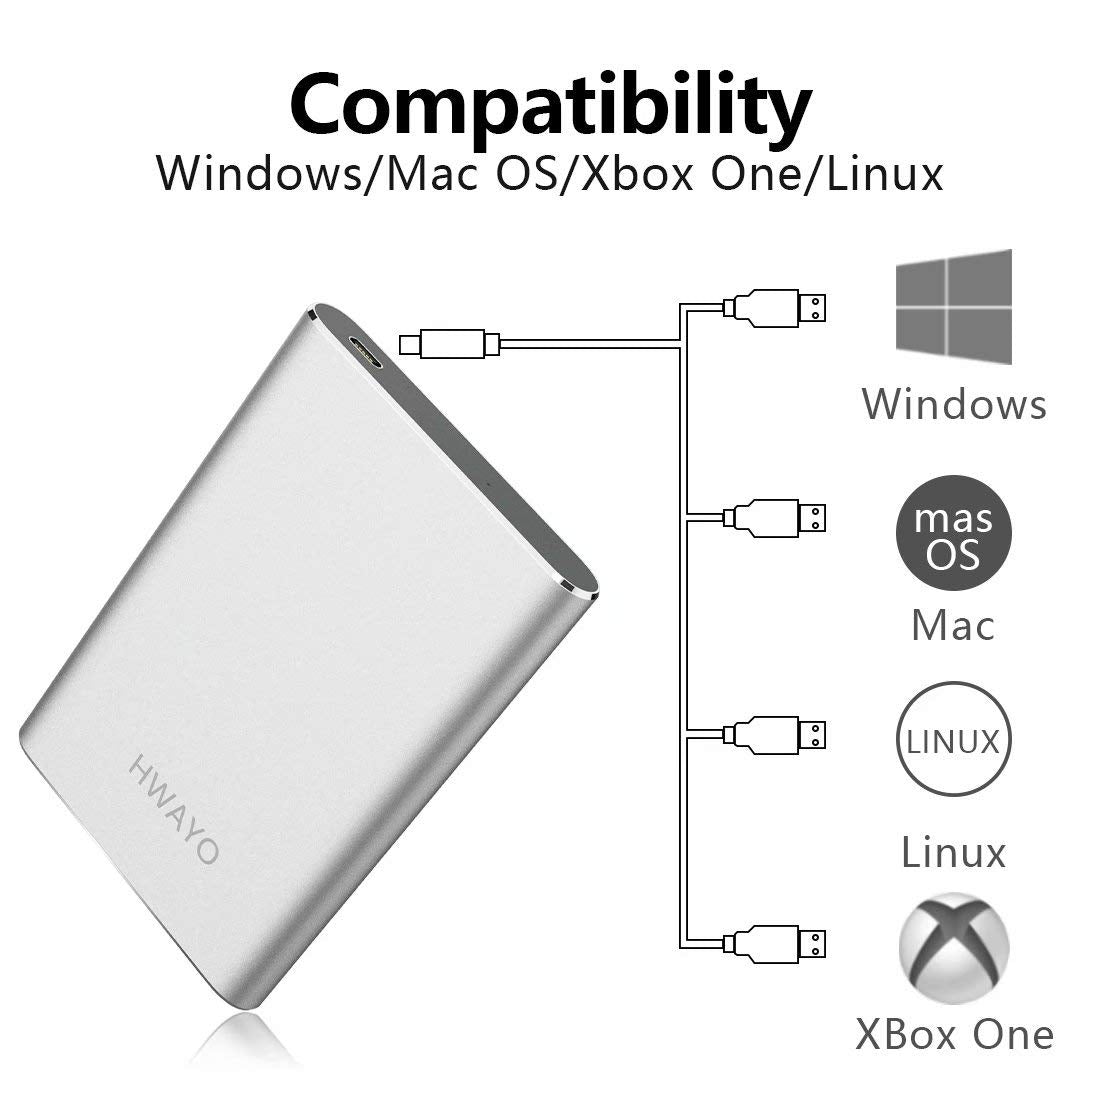 HWAYO 160GB Portable External Hard Drive, USB3.1 Gen 1 Type C Ultra Slim 2.5'' HDD Storage Compatible for PC, Desktop, Laptop, Mac, Xbox One (Silver)